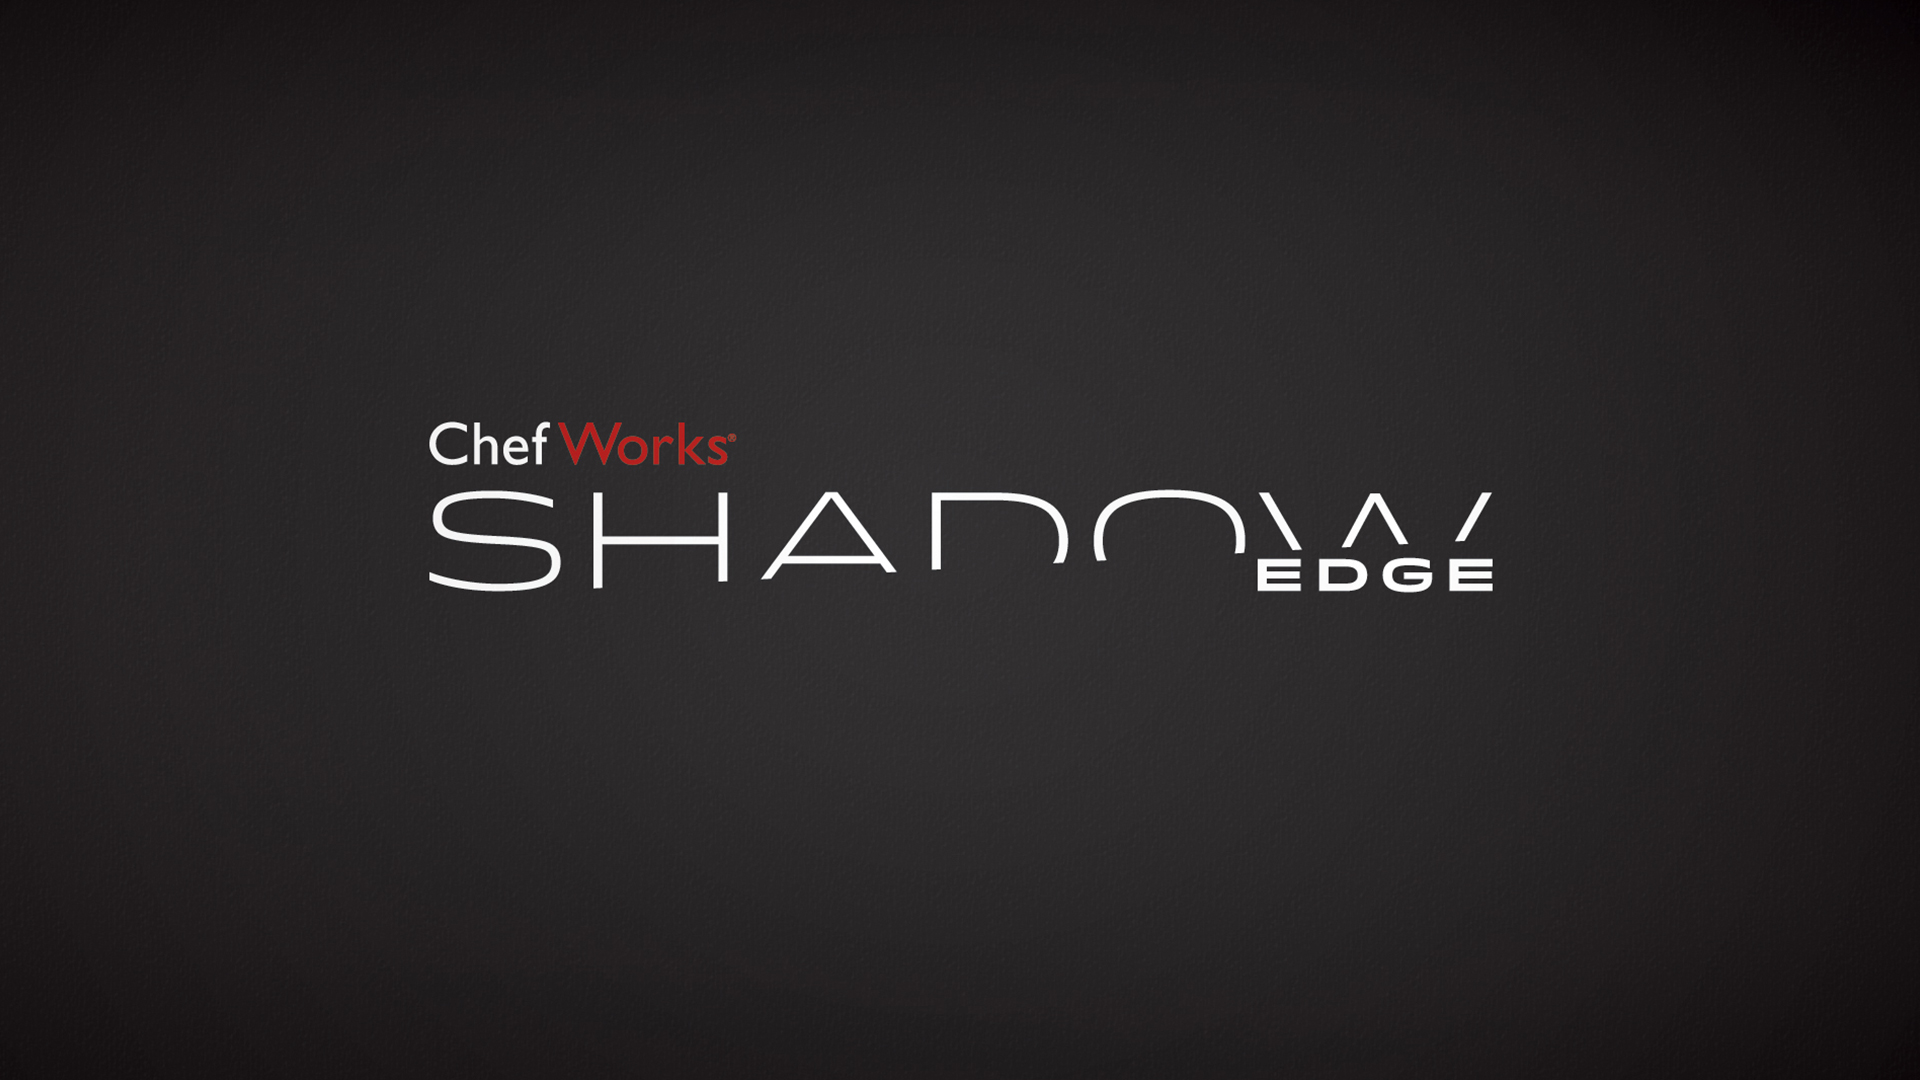 Chefworks Shadow Edge Knife Branding logo